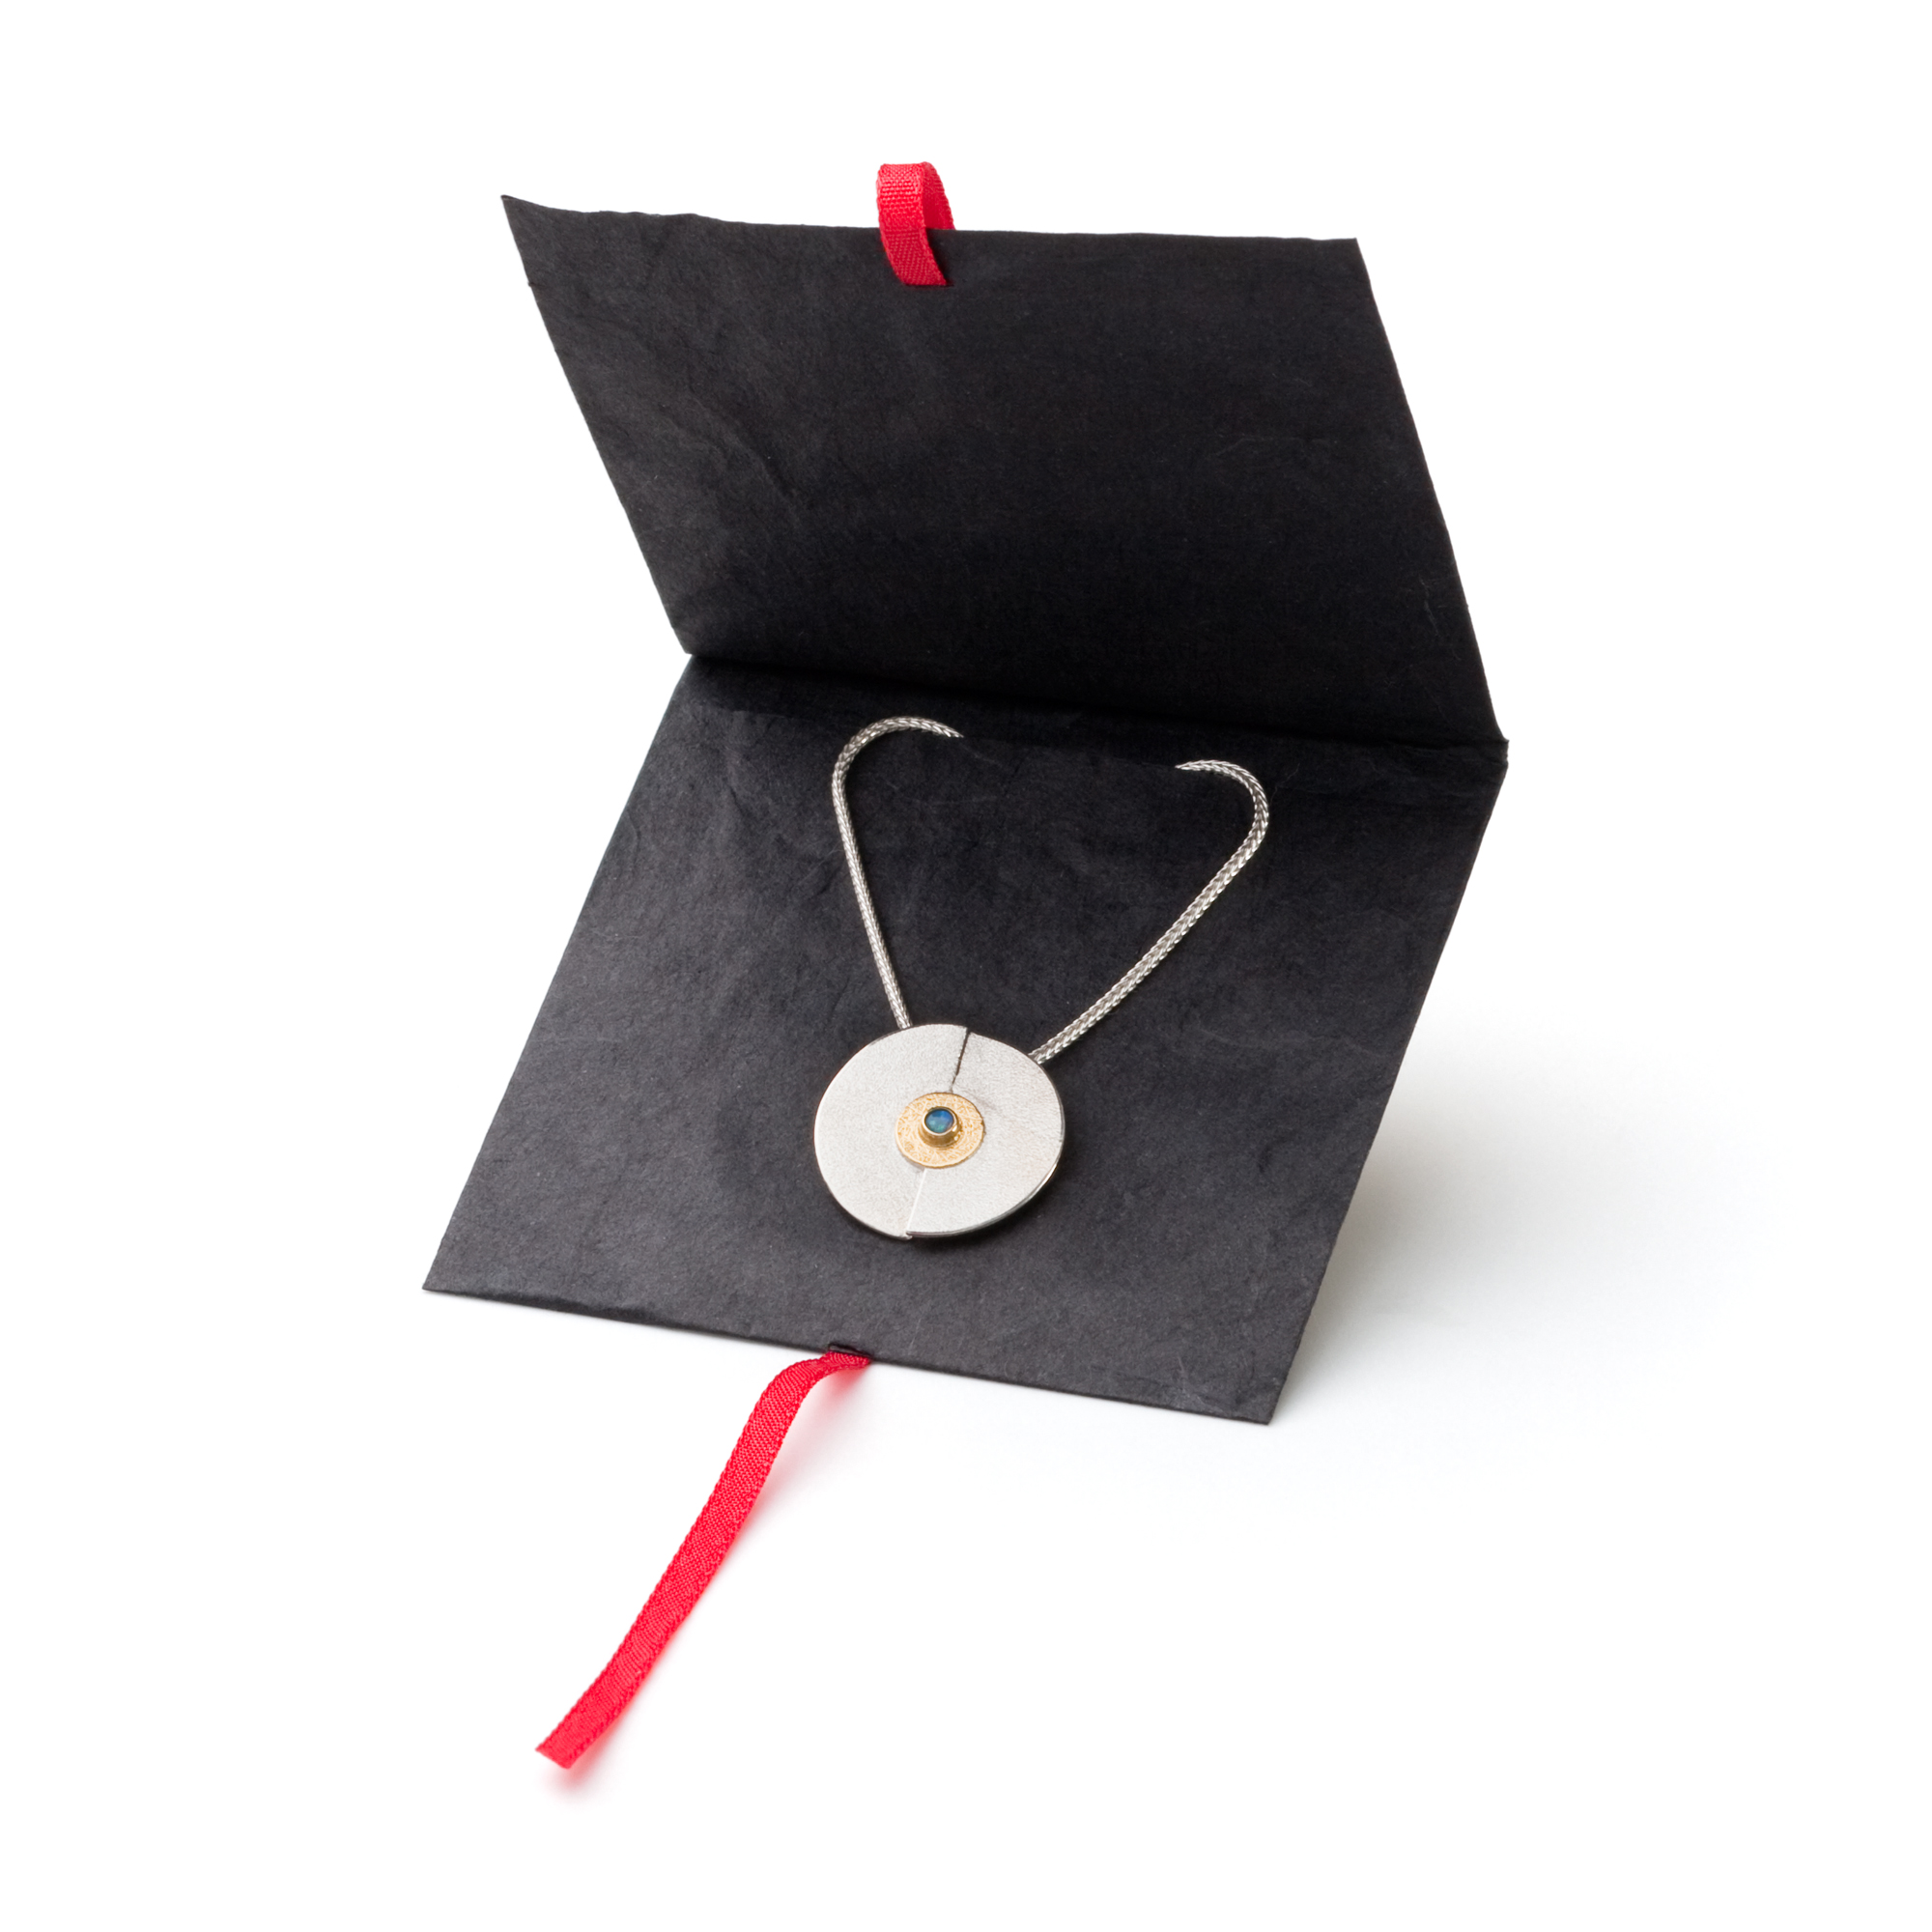 Paperbag small, 80 x 80 mm, black/ red ribbon